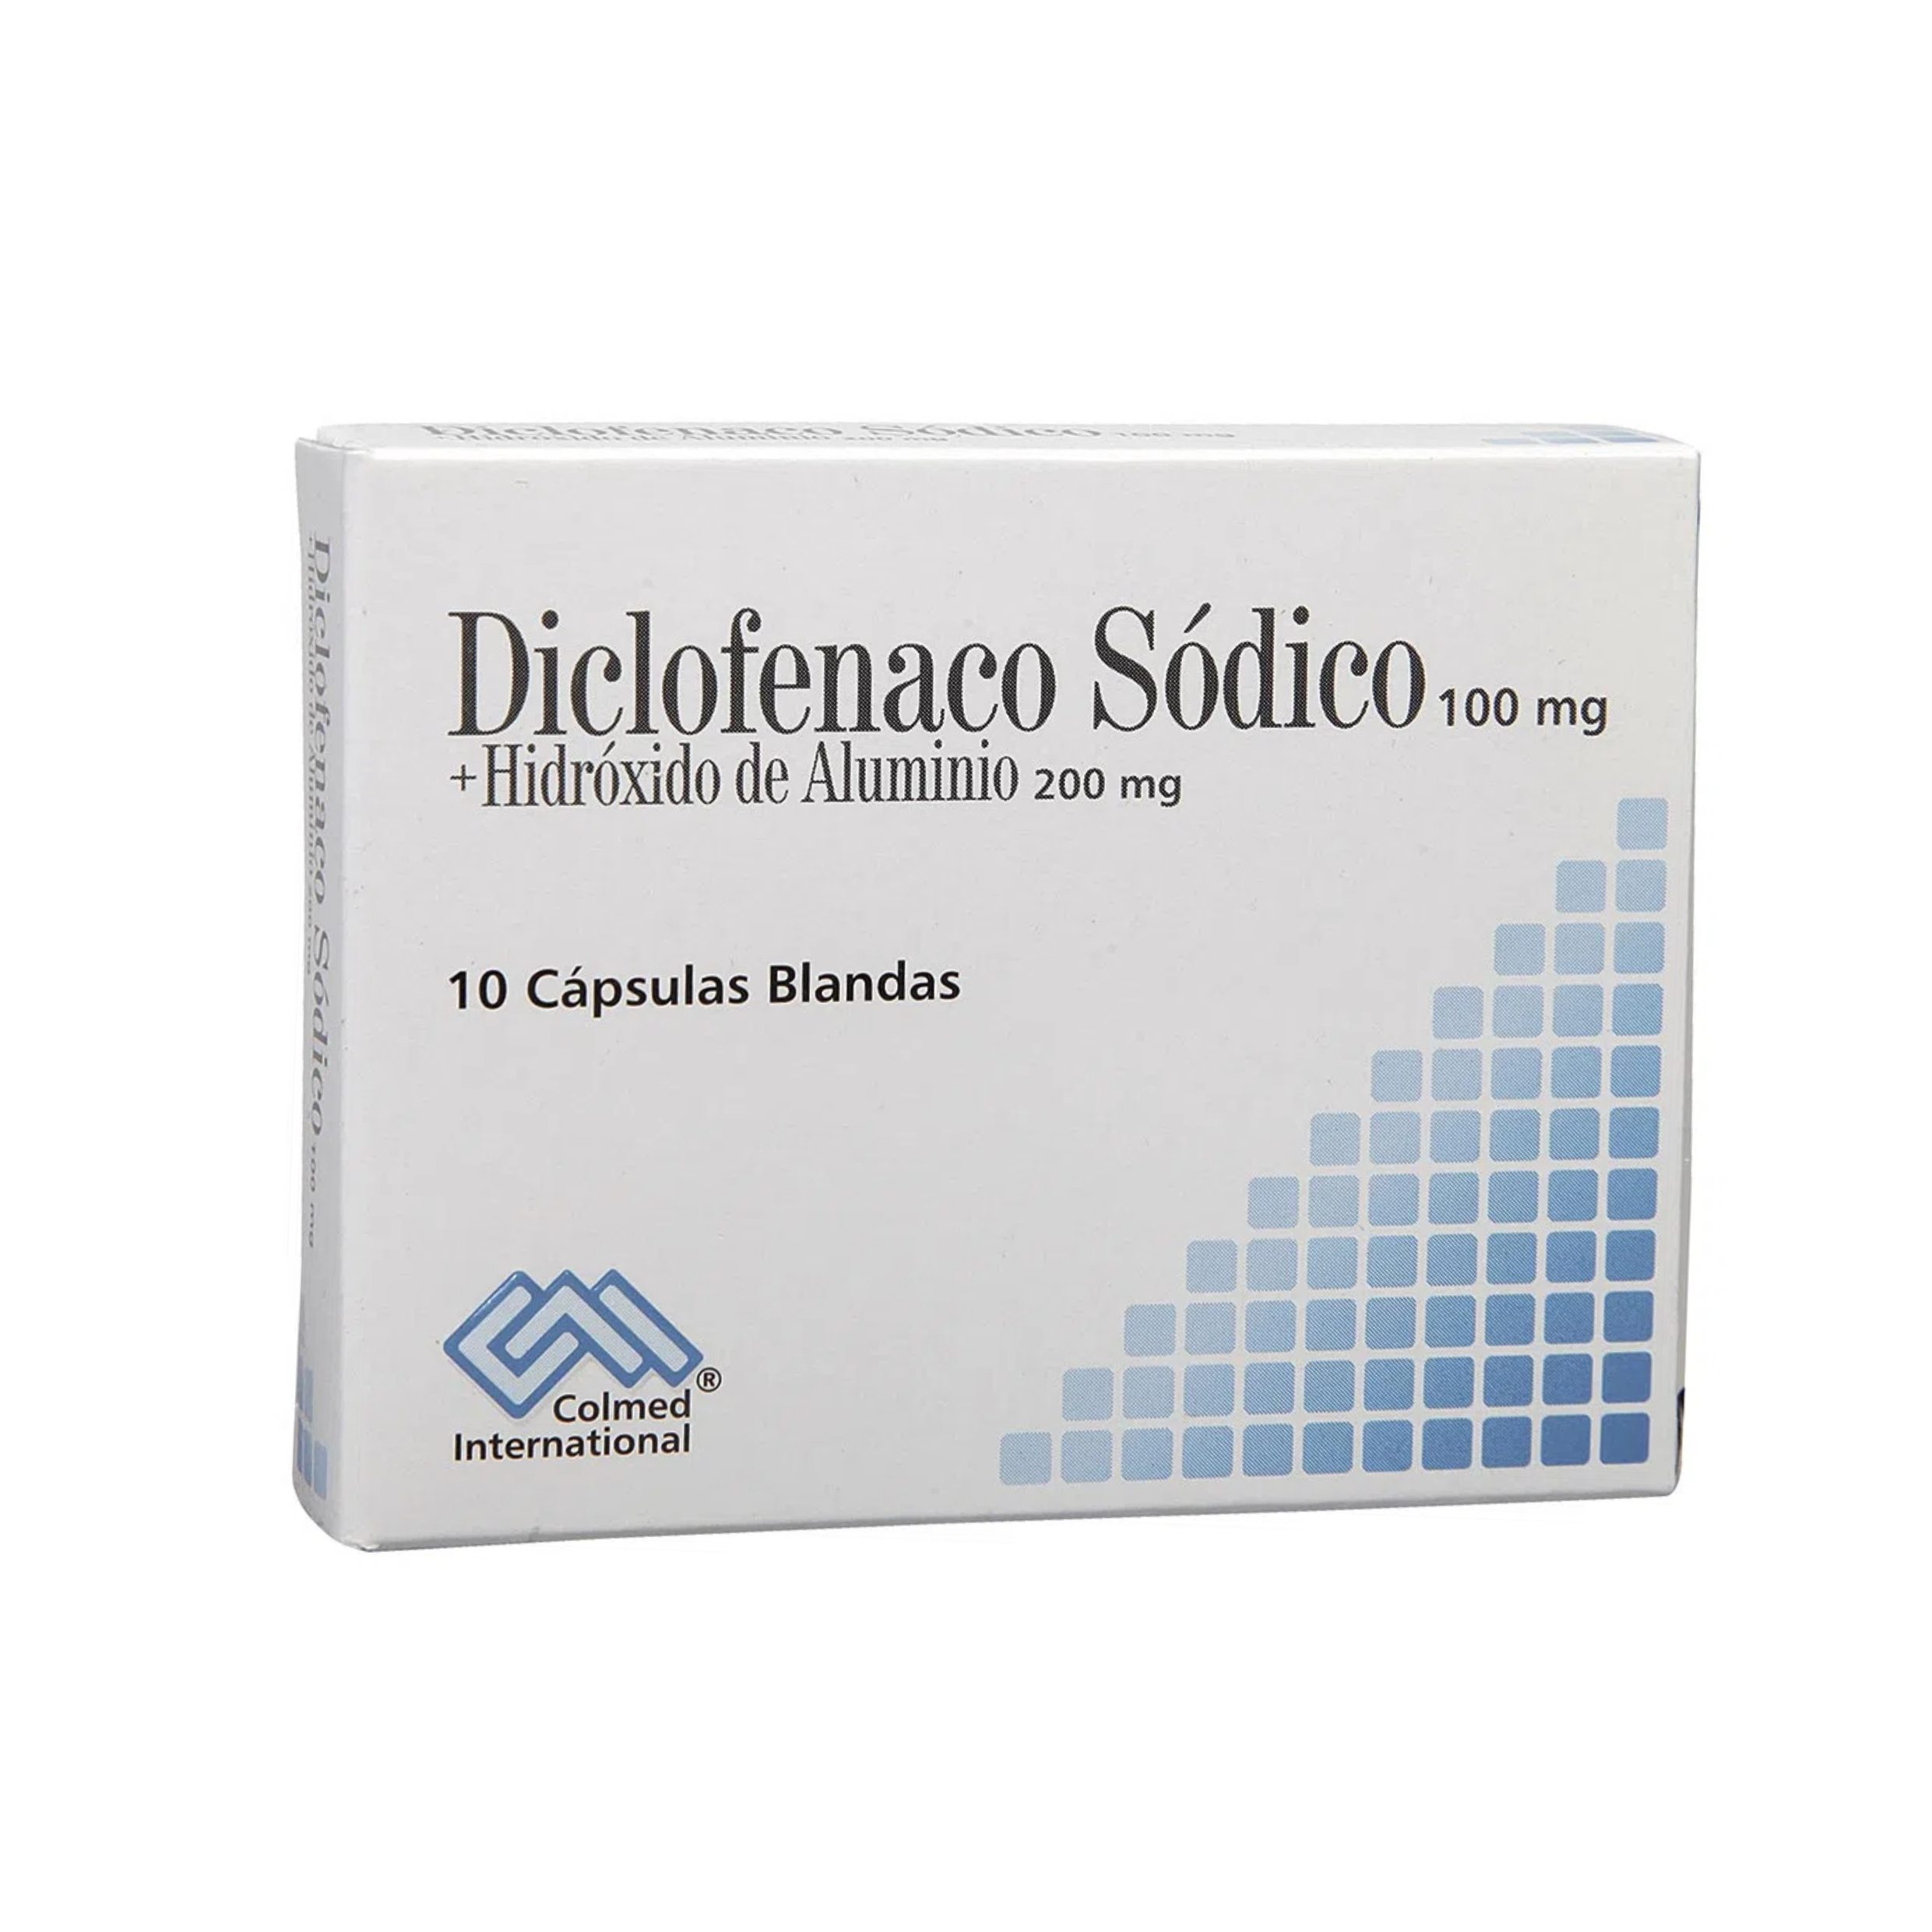 Diclofenaco Sódico 100 mg + Hidroxido de Aluminio 200 mg Caja x 10 Cápsulas Blandas